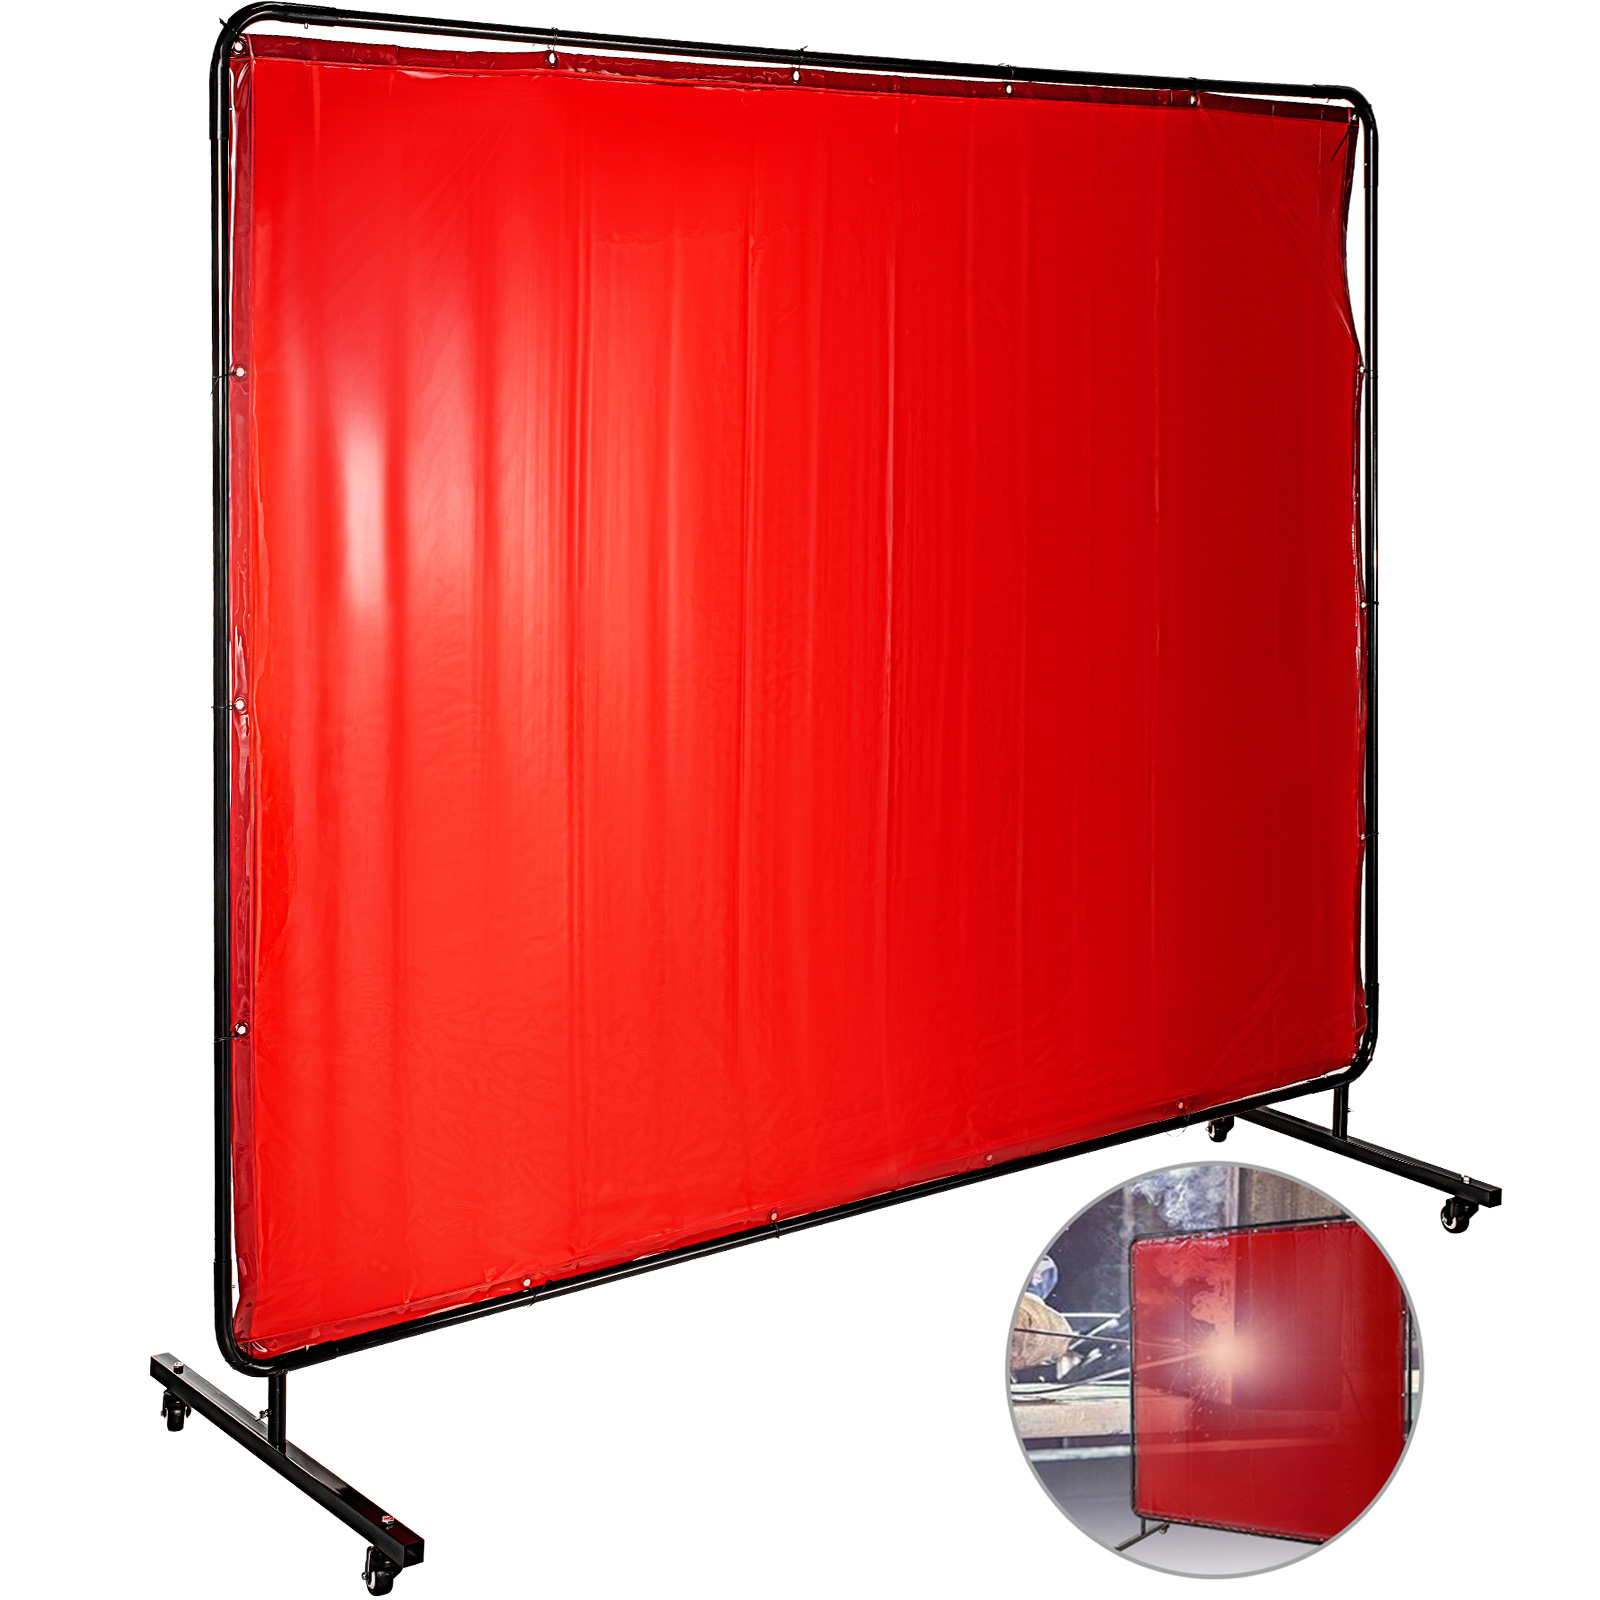 Welding Curtain Welding Screens&nbsp6' x 8' Flame Retardant Vinyl with Frame Red от Vevor Many GEOs